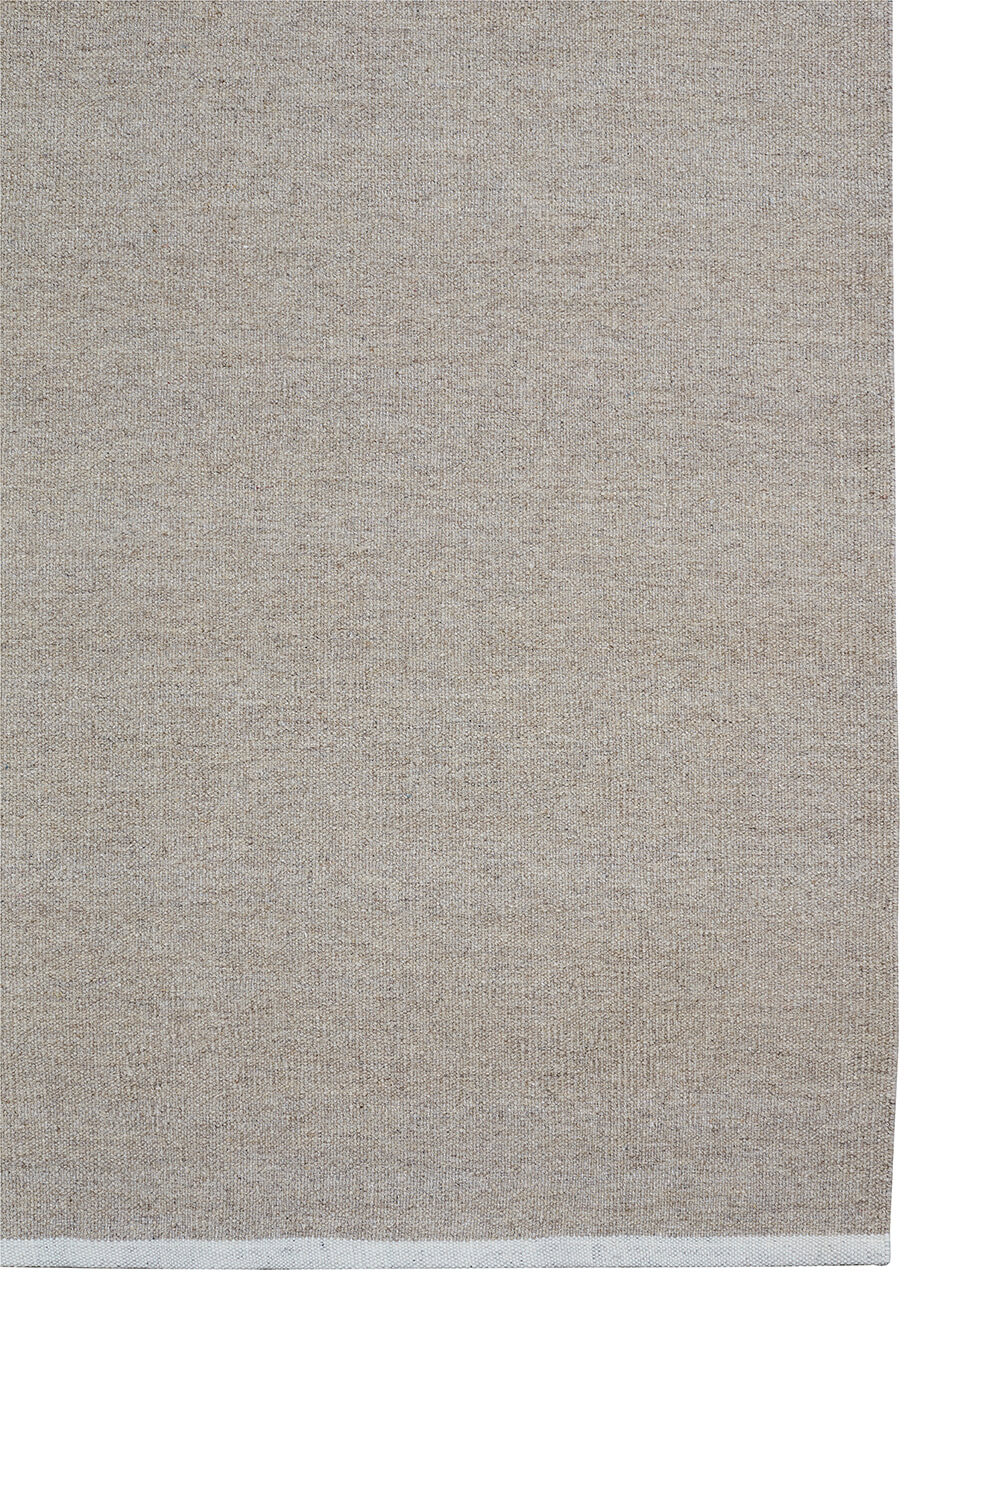 Escape Kelim Teppich ohne Nähten, 250 x 350 cm, light beige